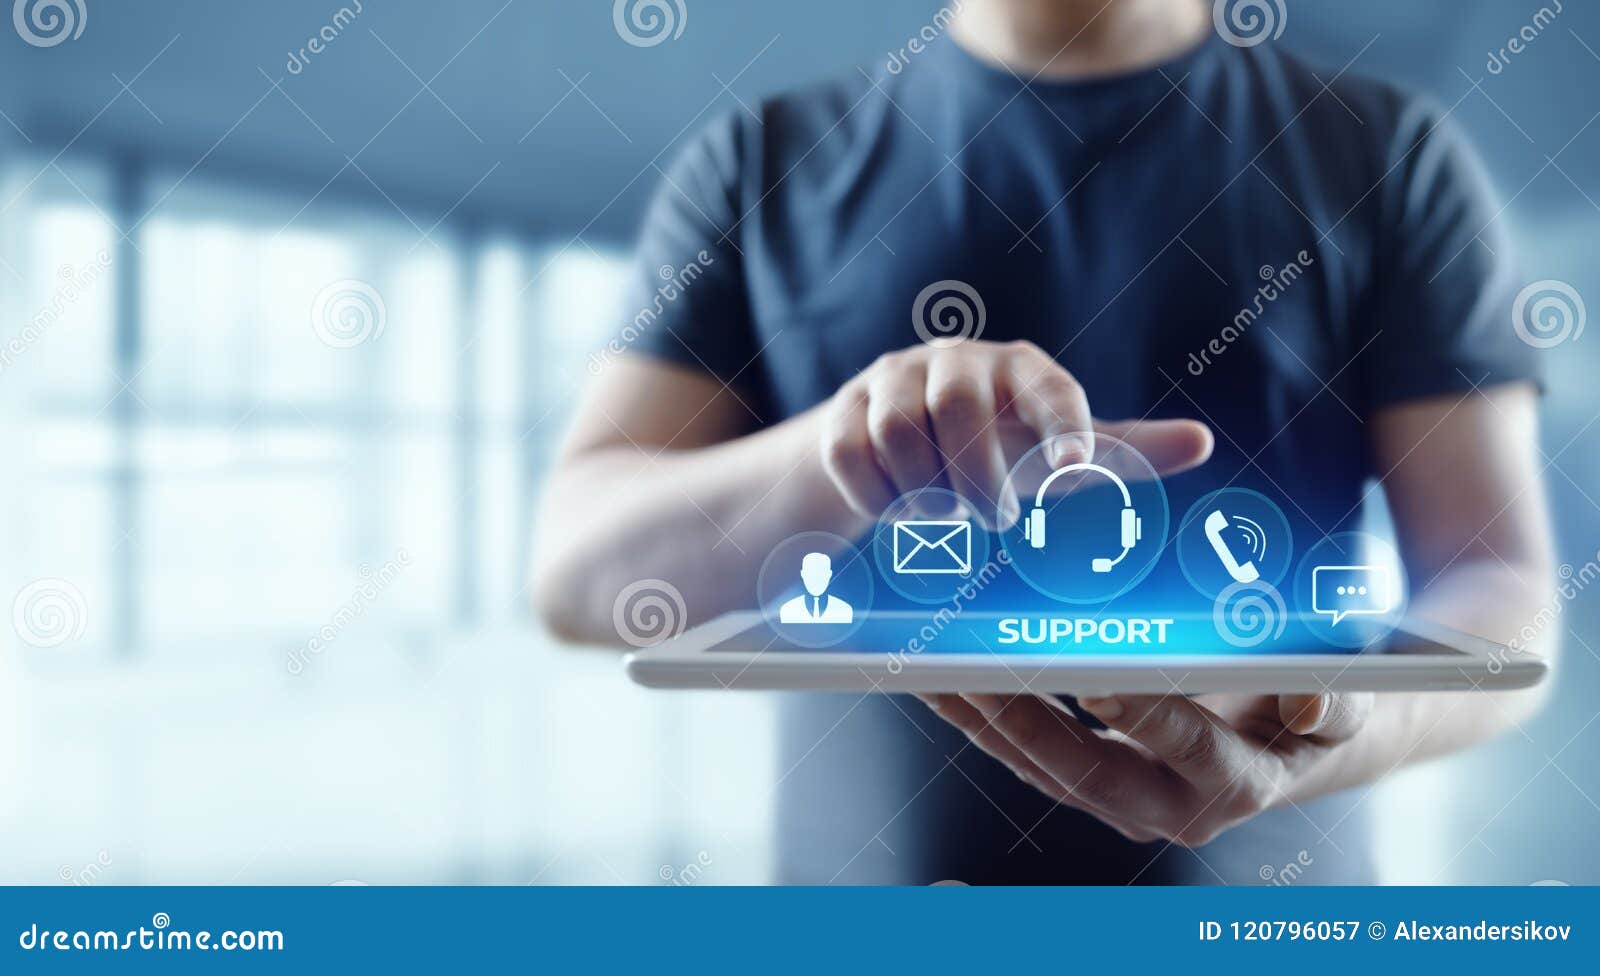 technical support center customer service internet business technology concept